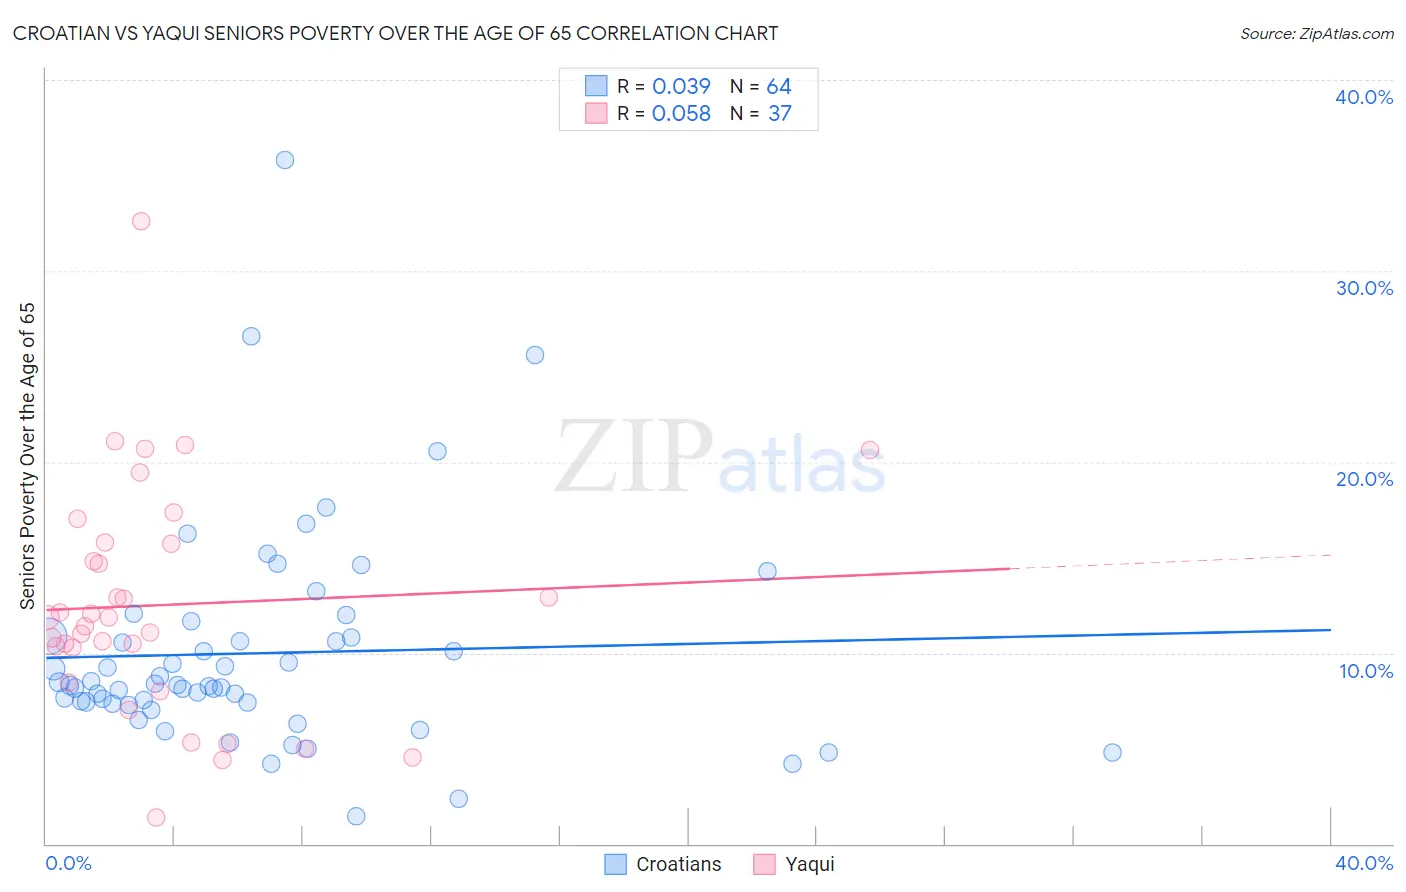 Croatian vs Yaqui Seniors Poverty Over the Age of 65